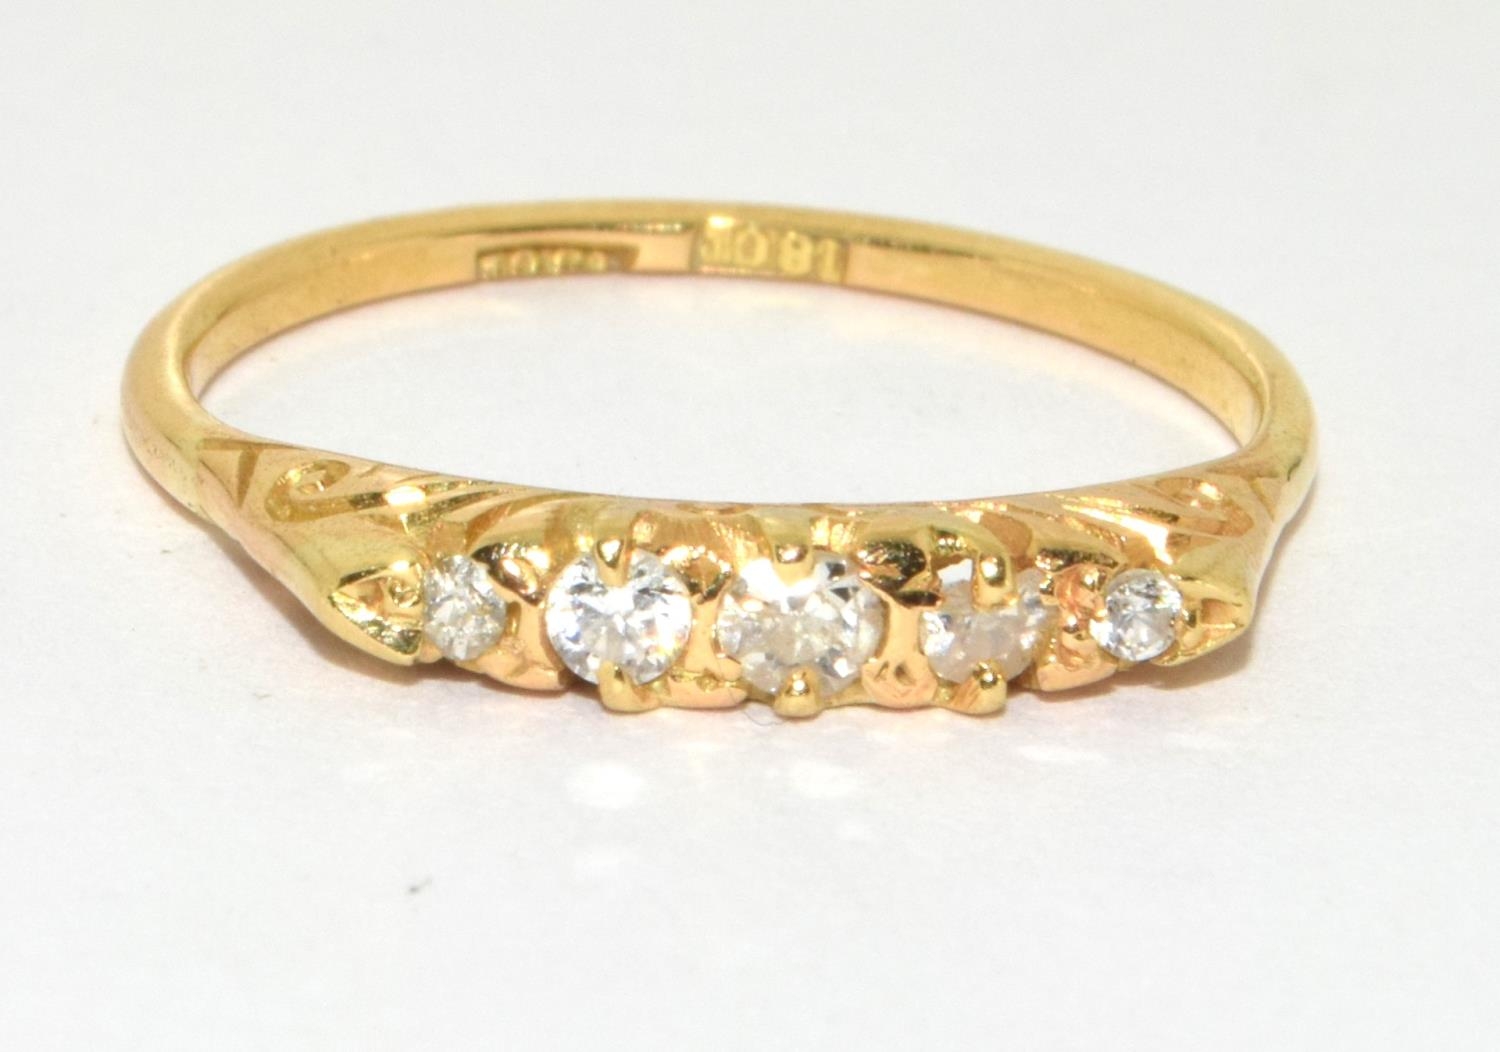 18ct gold antique set 5 stone ladies diamond ring 3g size N - Image 6 of 6